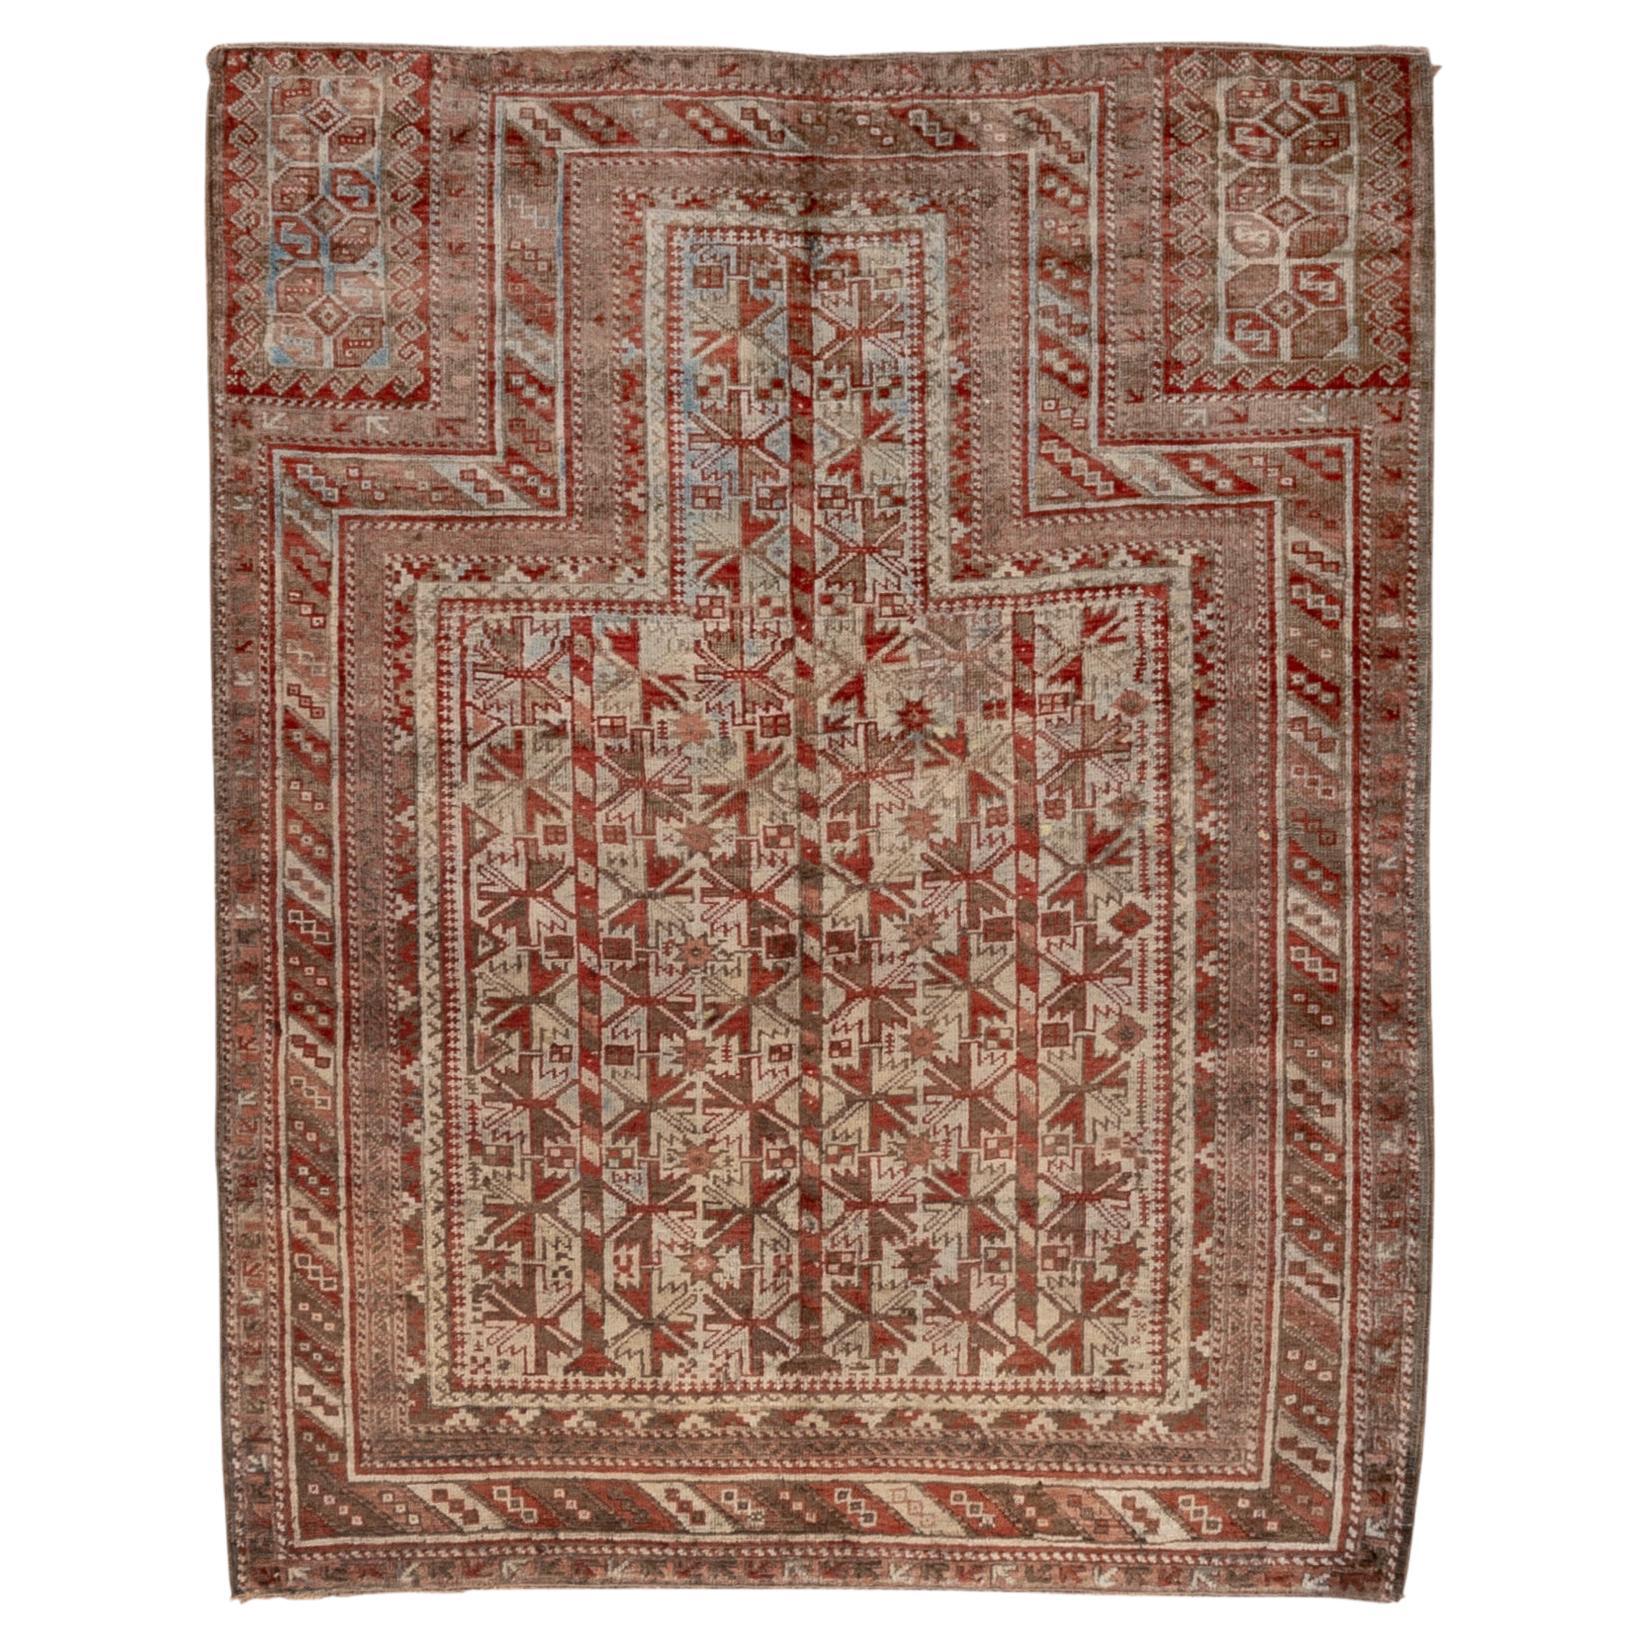 Beautiful Afghan Belouch Prayer Rug, Red, Seaform & Brown Tones, circa 1920s